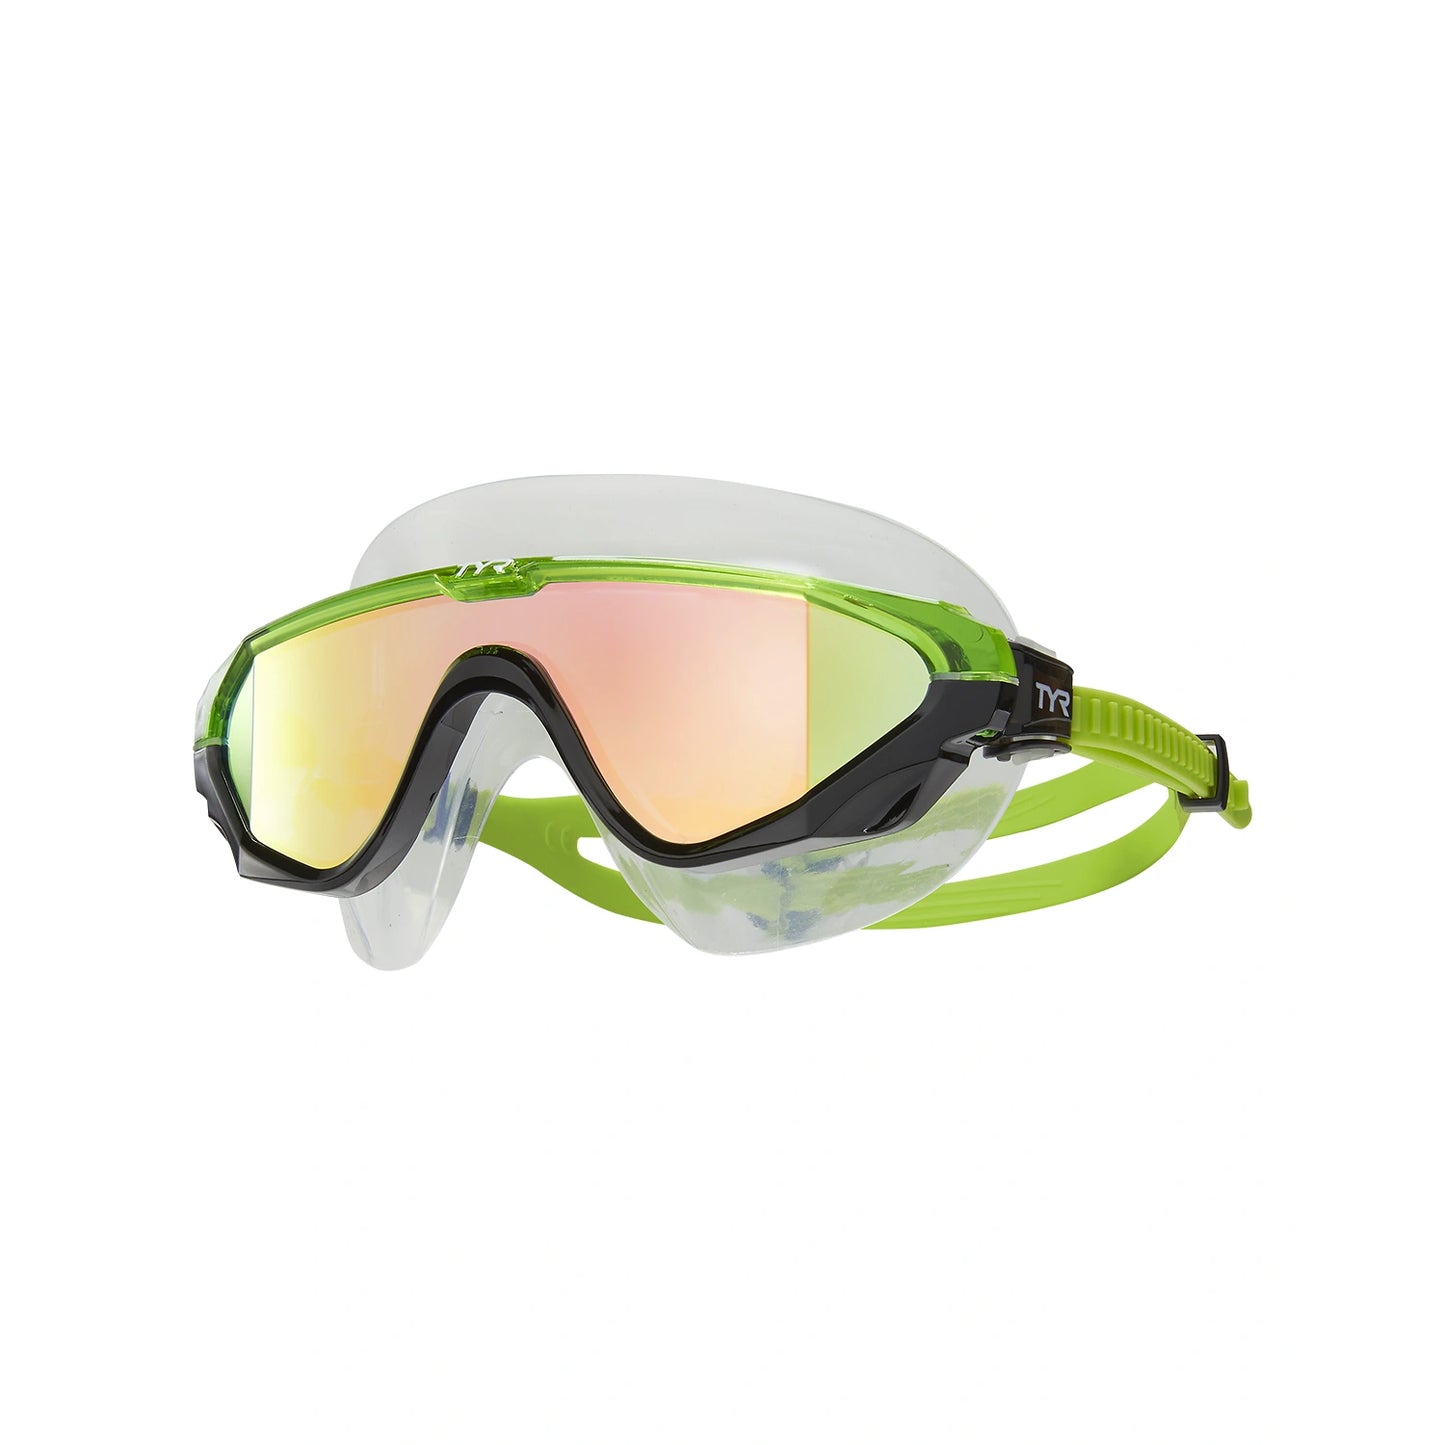 TYR Torrent Mirrored Mask Swimming Goggles, Rainbow/Black - Best Price online Prokicksports.com